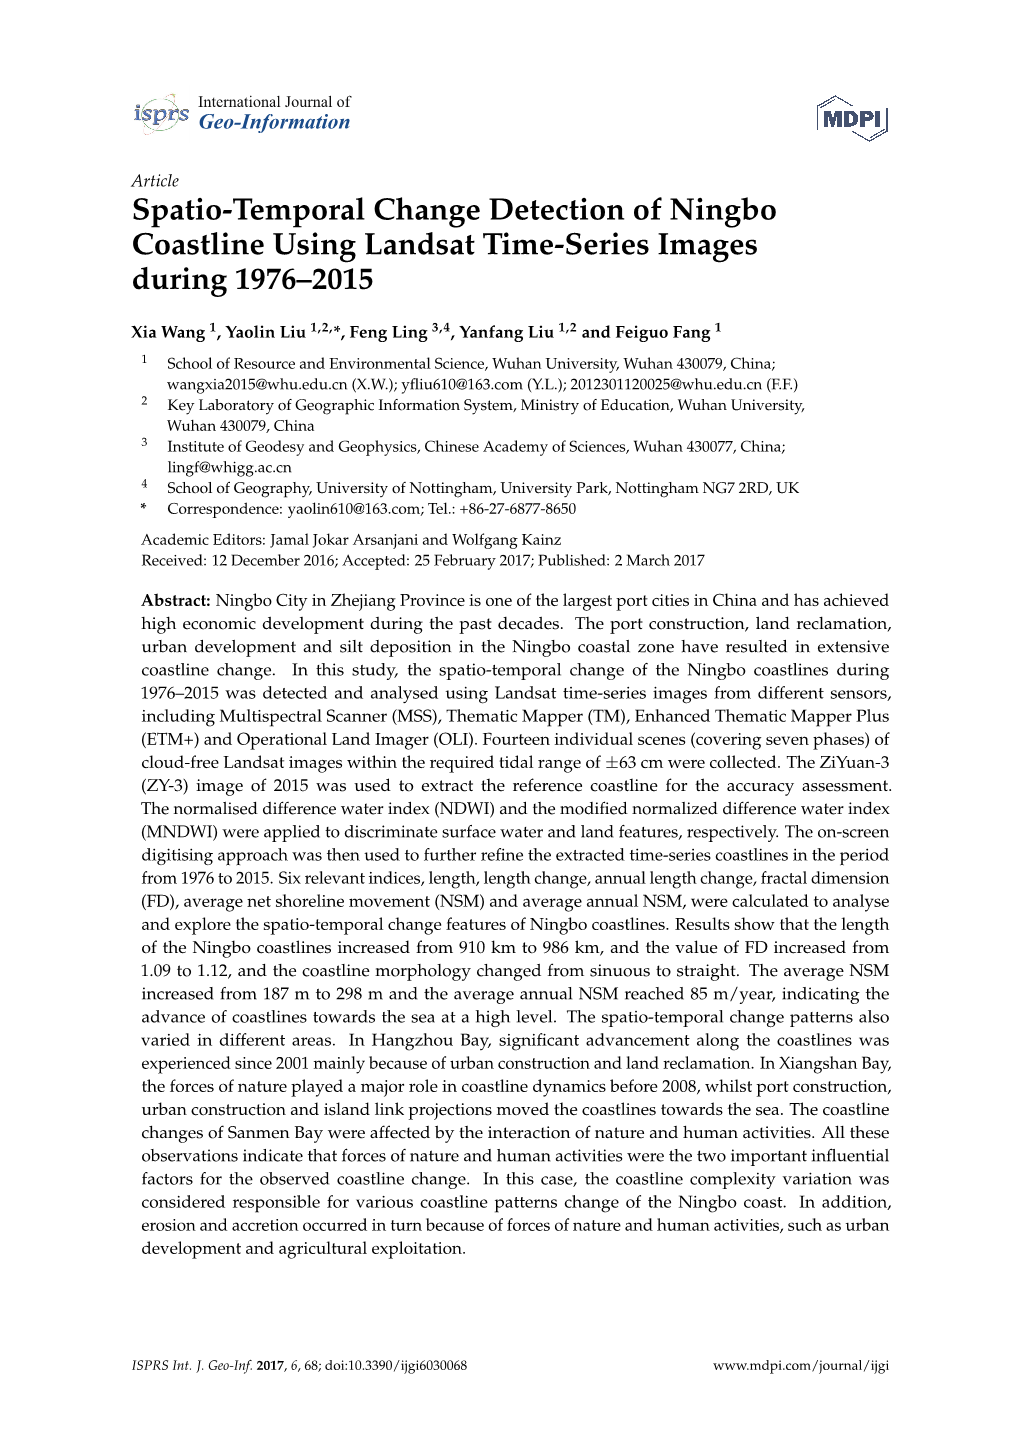 Spatio-Temporal Change Detection of Ningbo Coastline Using Landsat Time-Series Images During 1976–2015